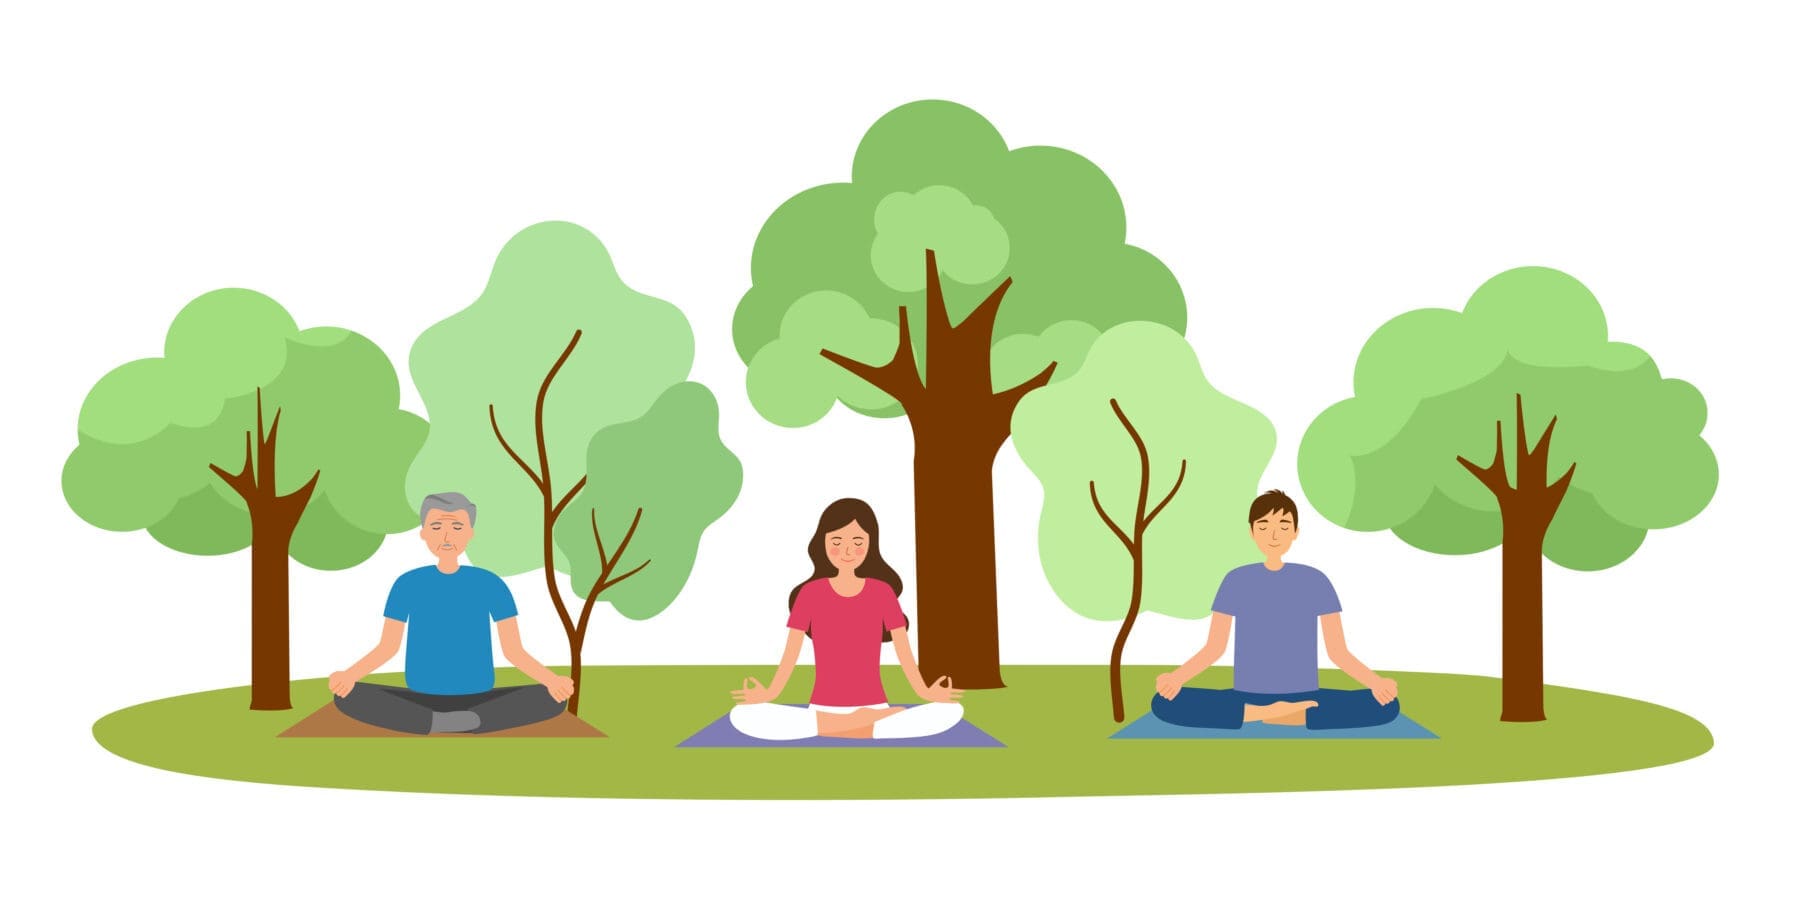 Illustration of three people meditating at a park